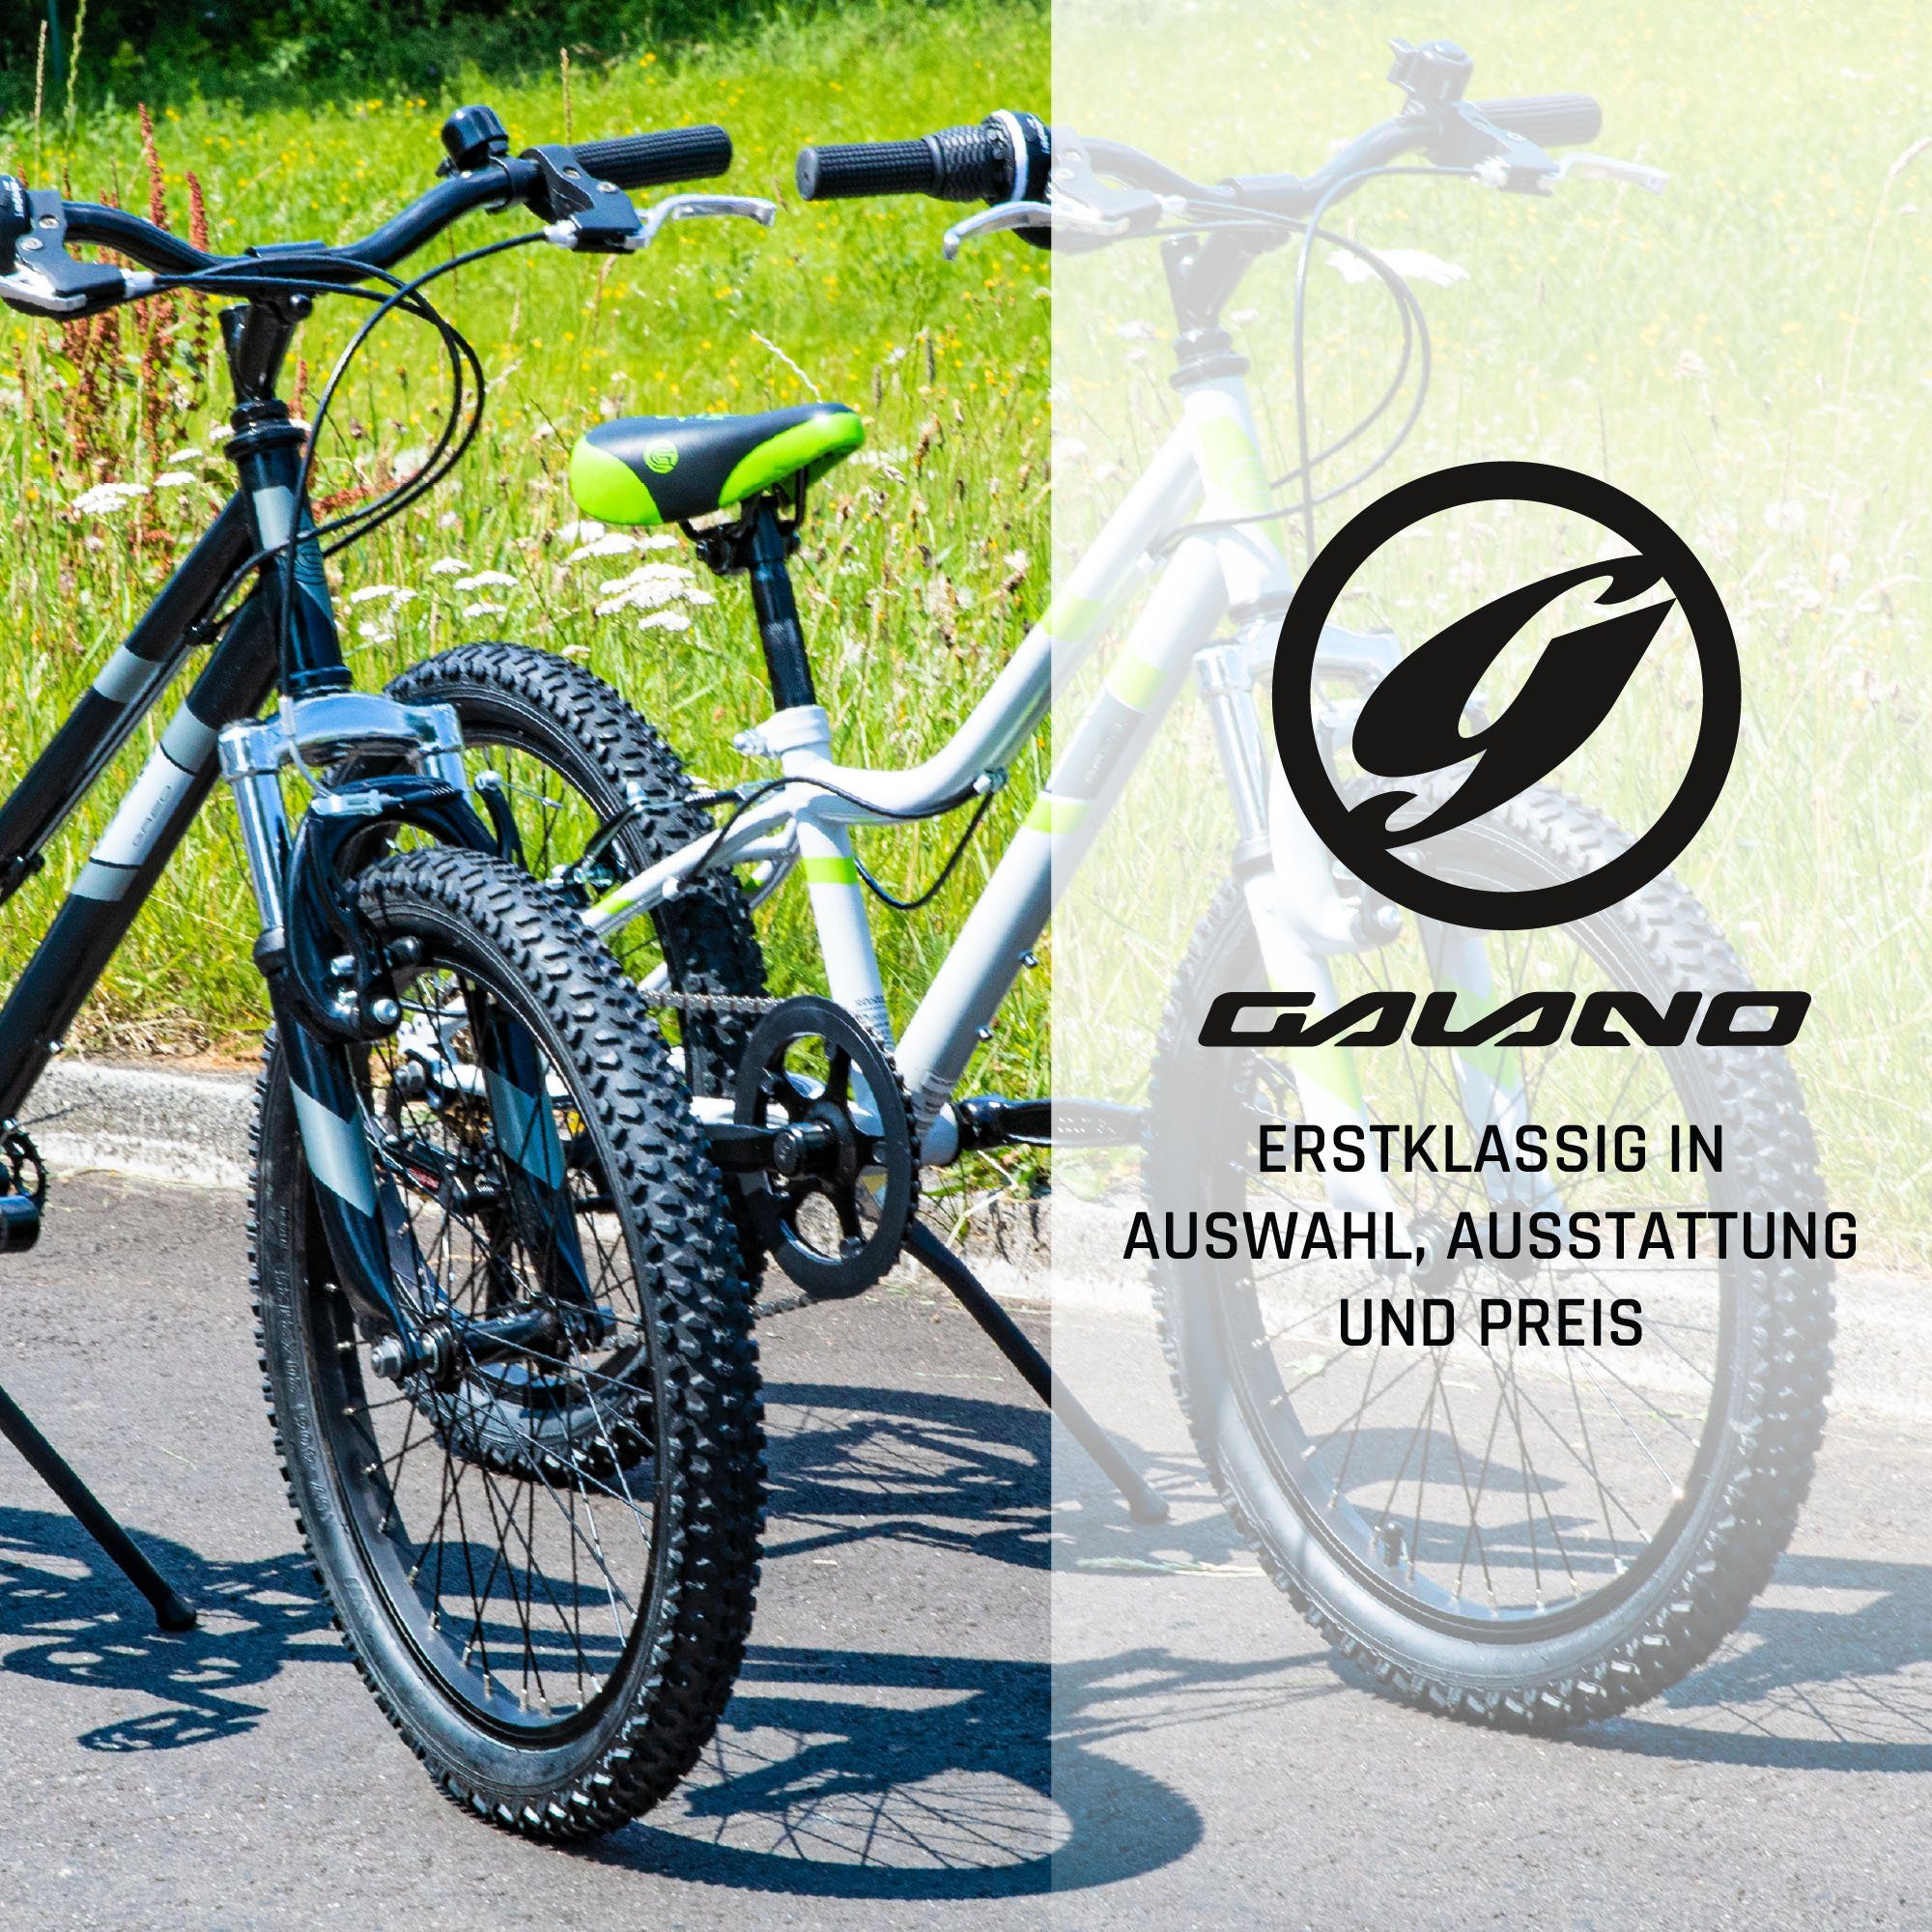 Galano Mountainbike GA20, 7 cm Gang, 5 Kinderfahrrad 20 - Fahrrad Jungen grau/blau ab 120 Zoll Jahre Mädchen 135 Kettenschaltung